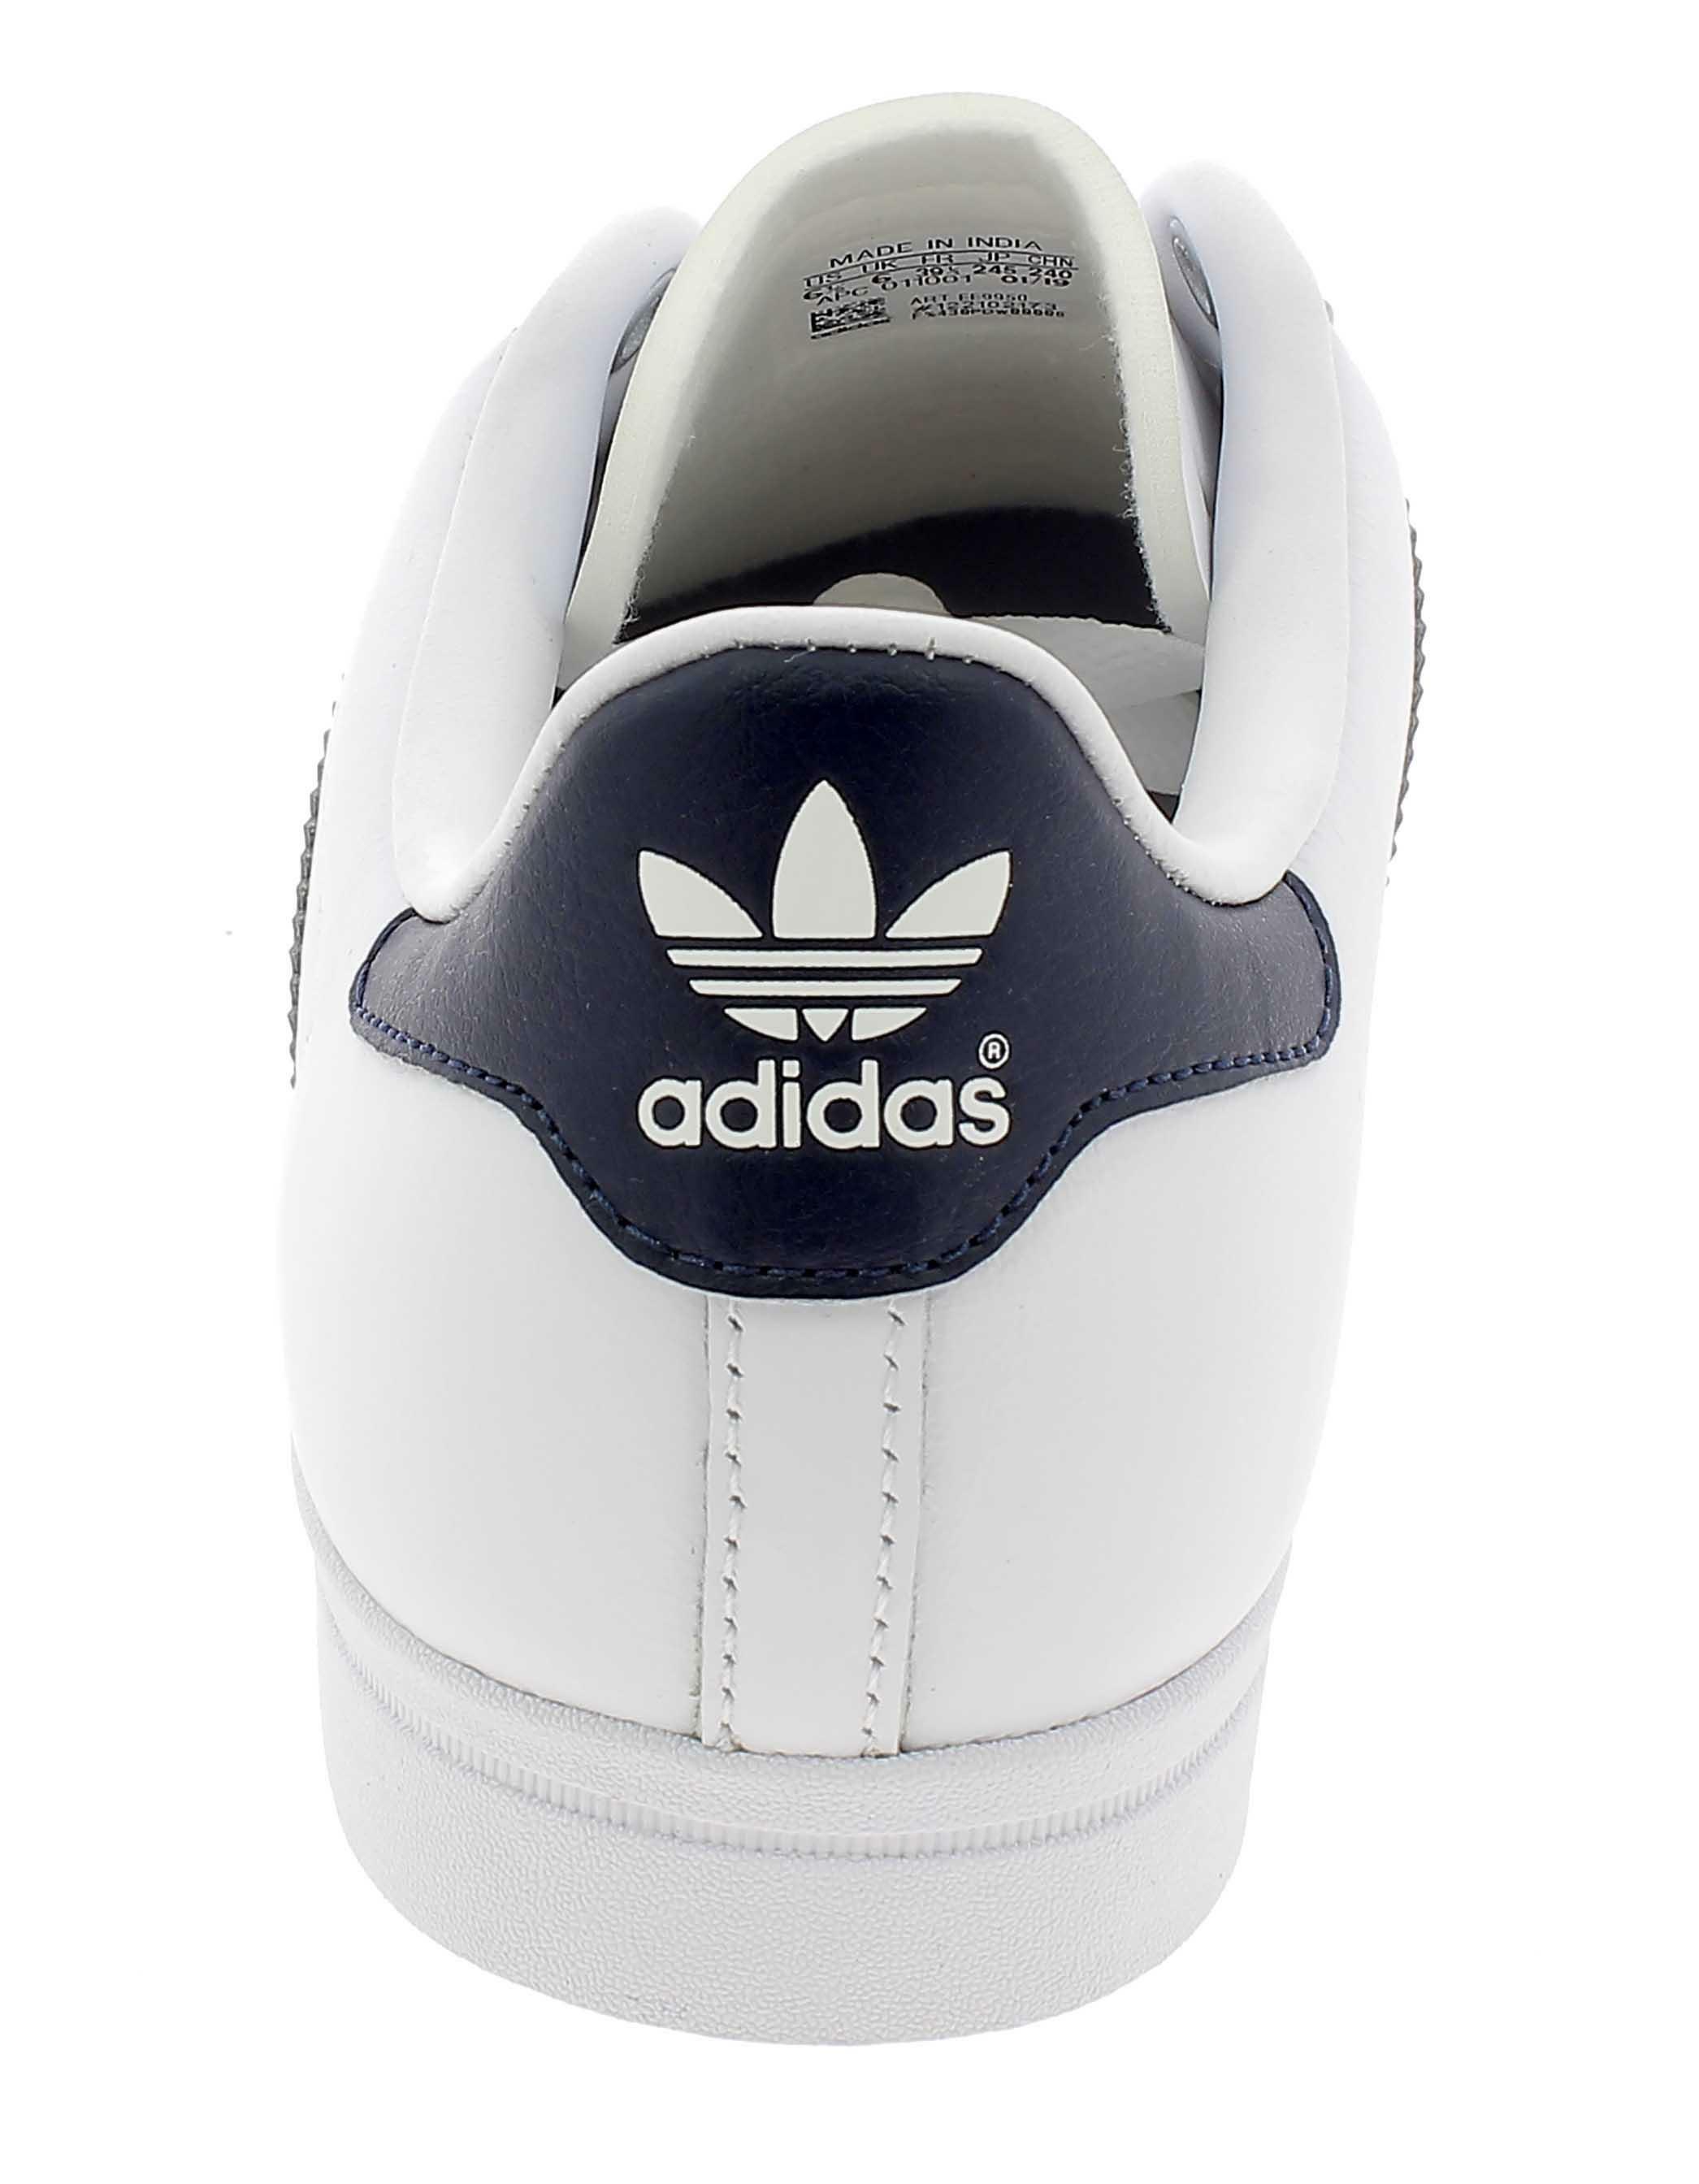 adidas adidas coast star scarpe sportive uomo bianche ee9950